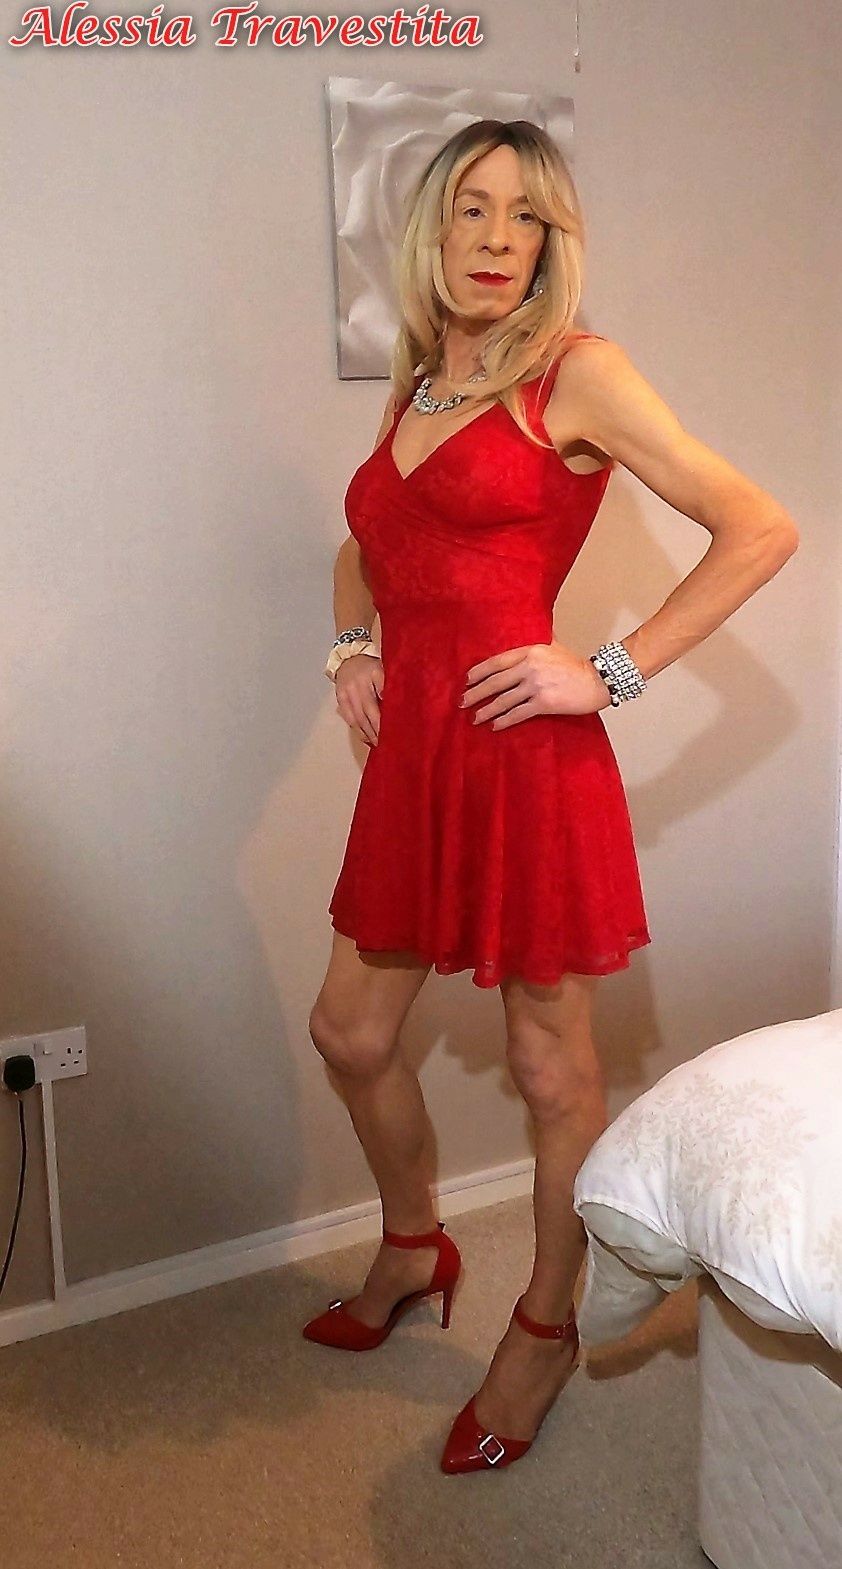 65 Alessia Travestita in Flirty Red Dress #51